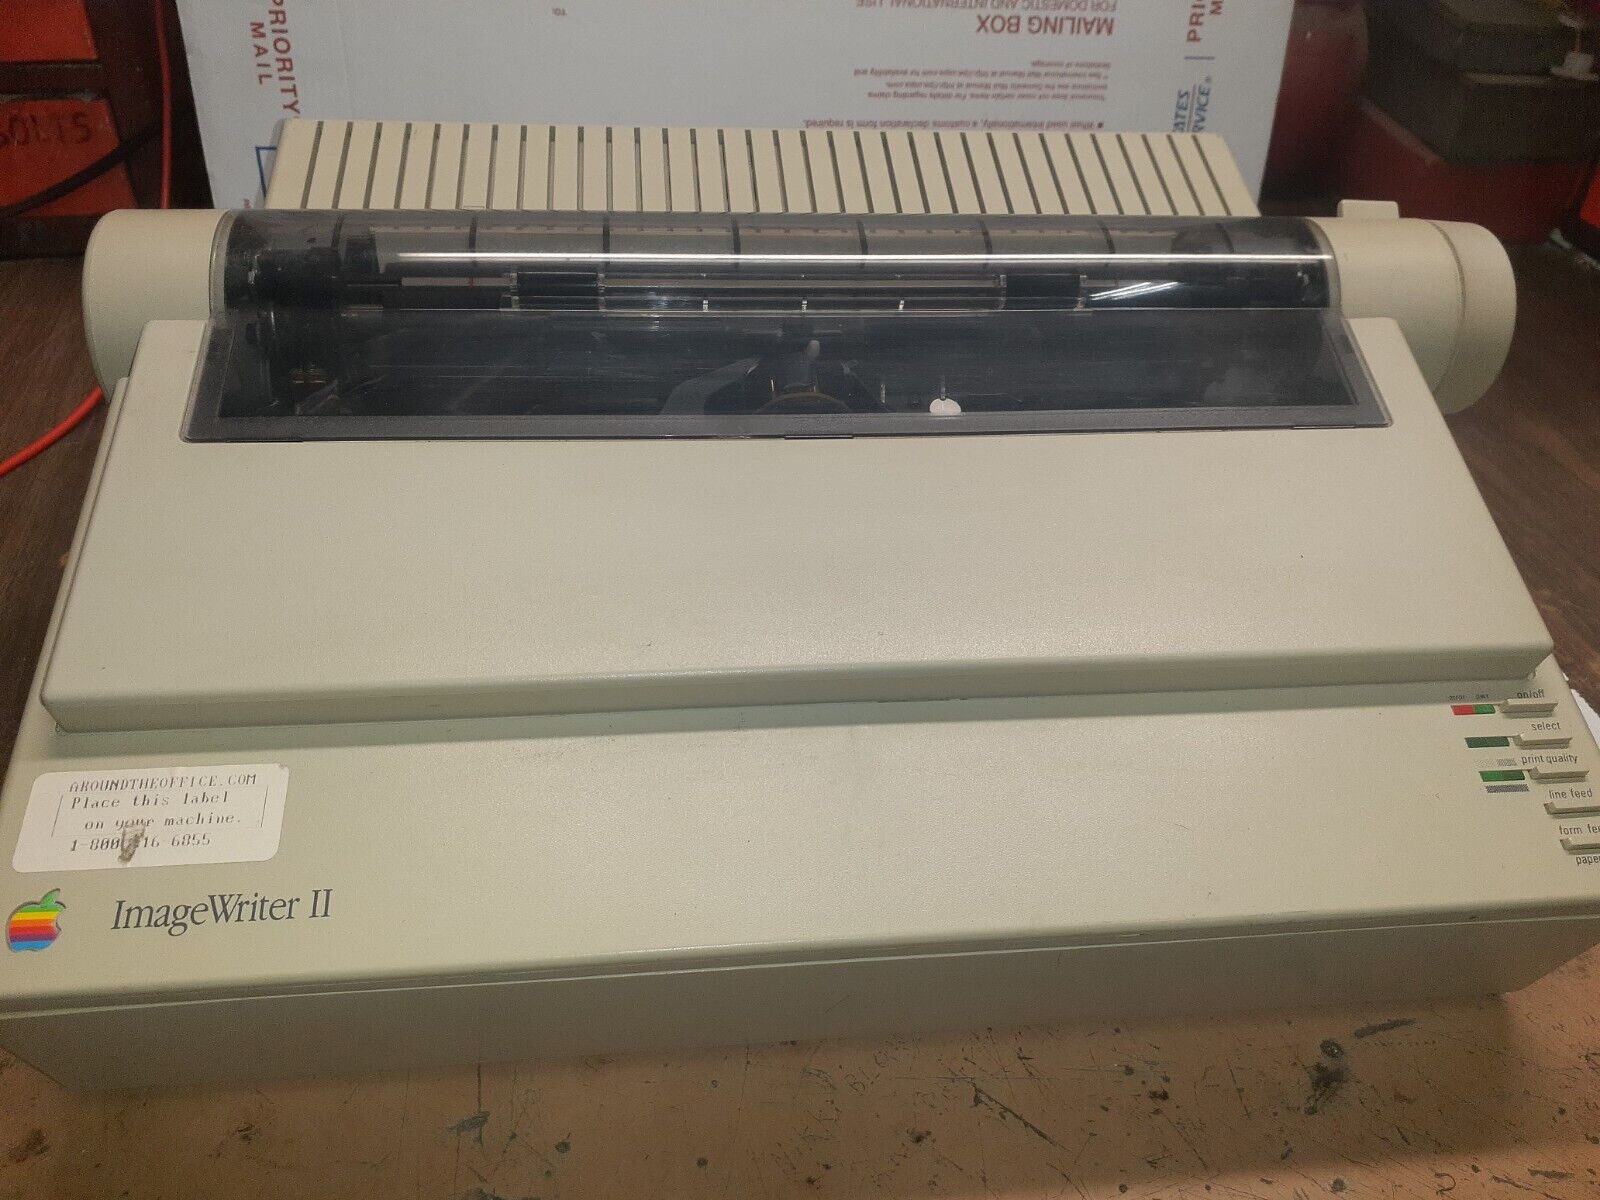 Apple ImageWriter II Computer Printer A9M0320